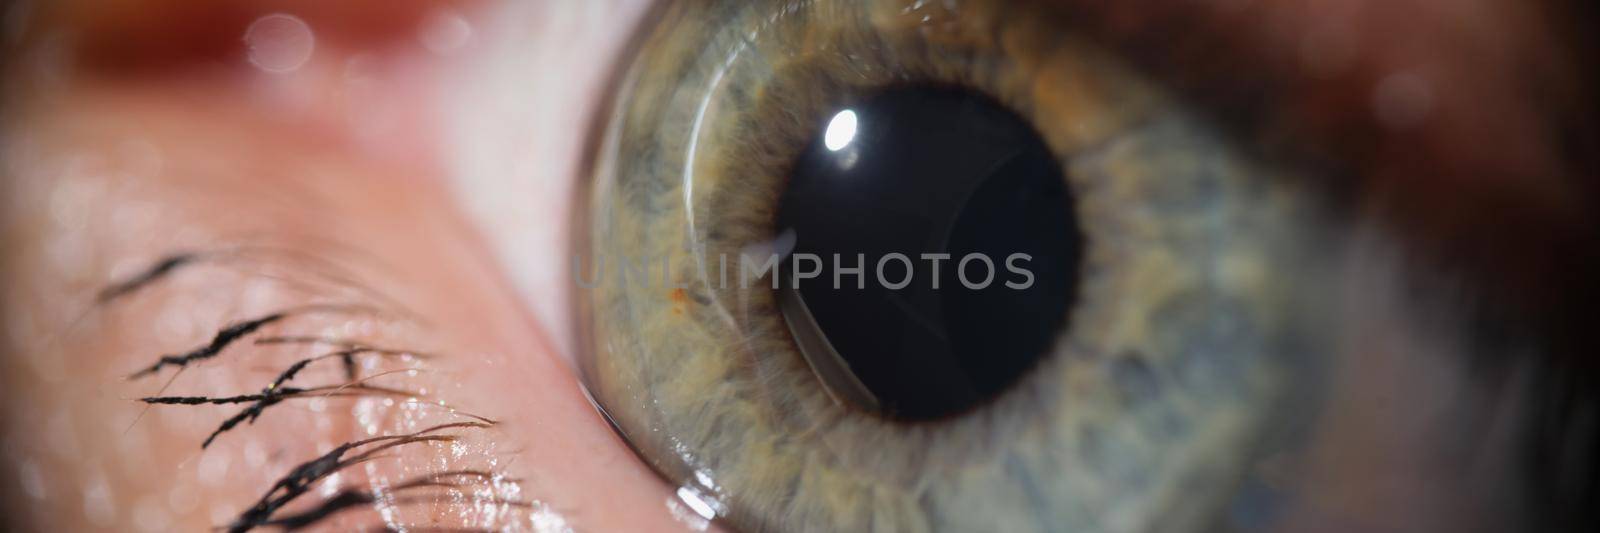 Close-up of beautiful green woman eye with mascara makeup on eyelashes. Macro shot of human eye looking away. Ophthalmology, oculist, beauty, optic concept